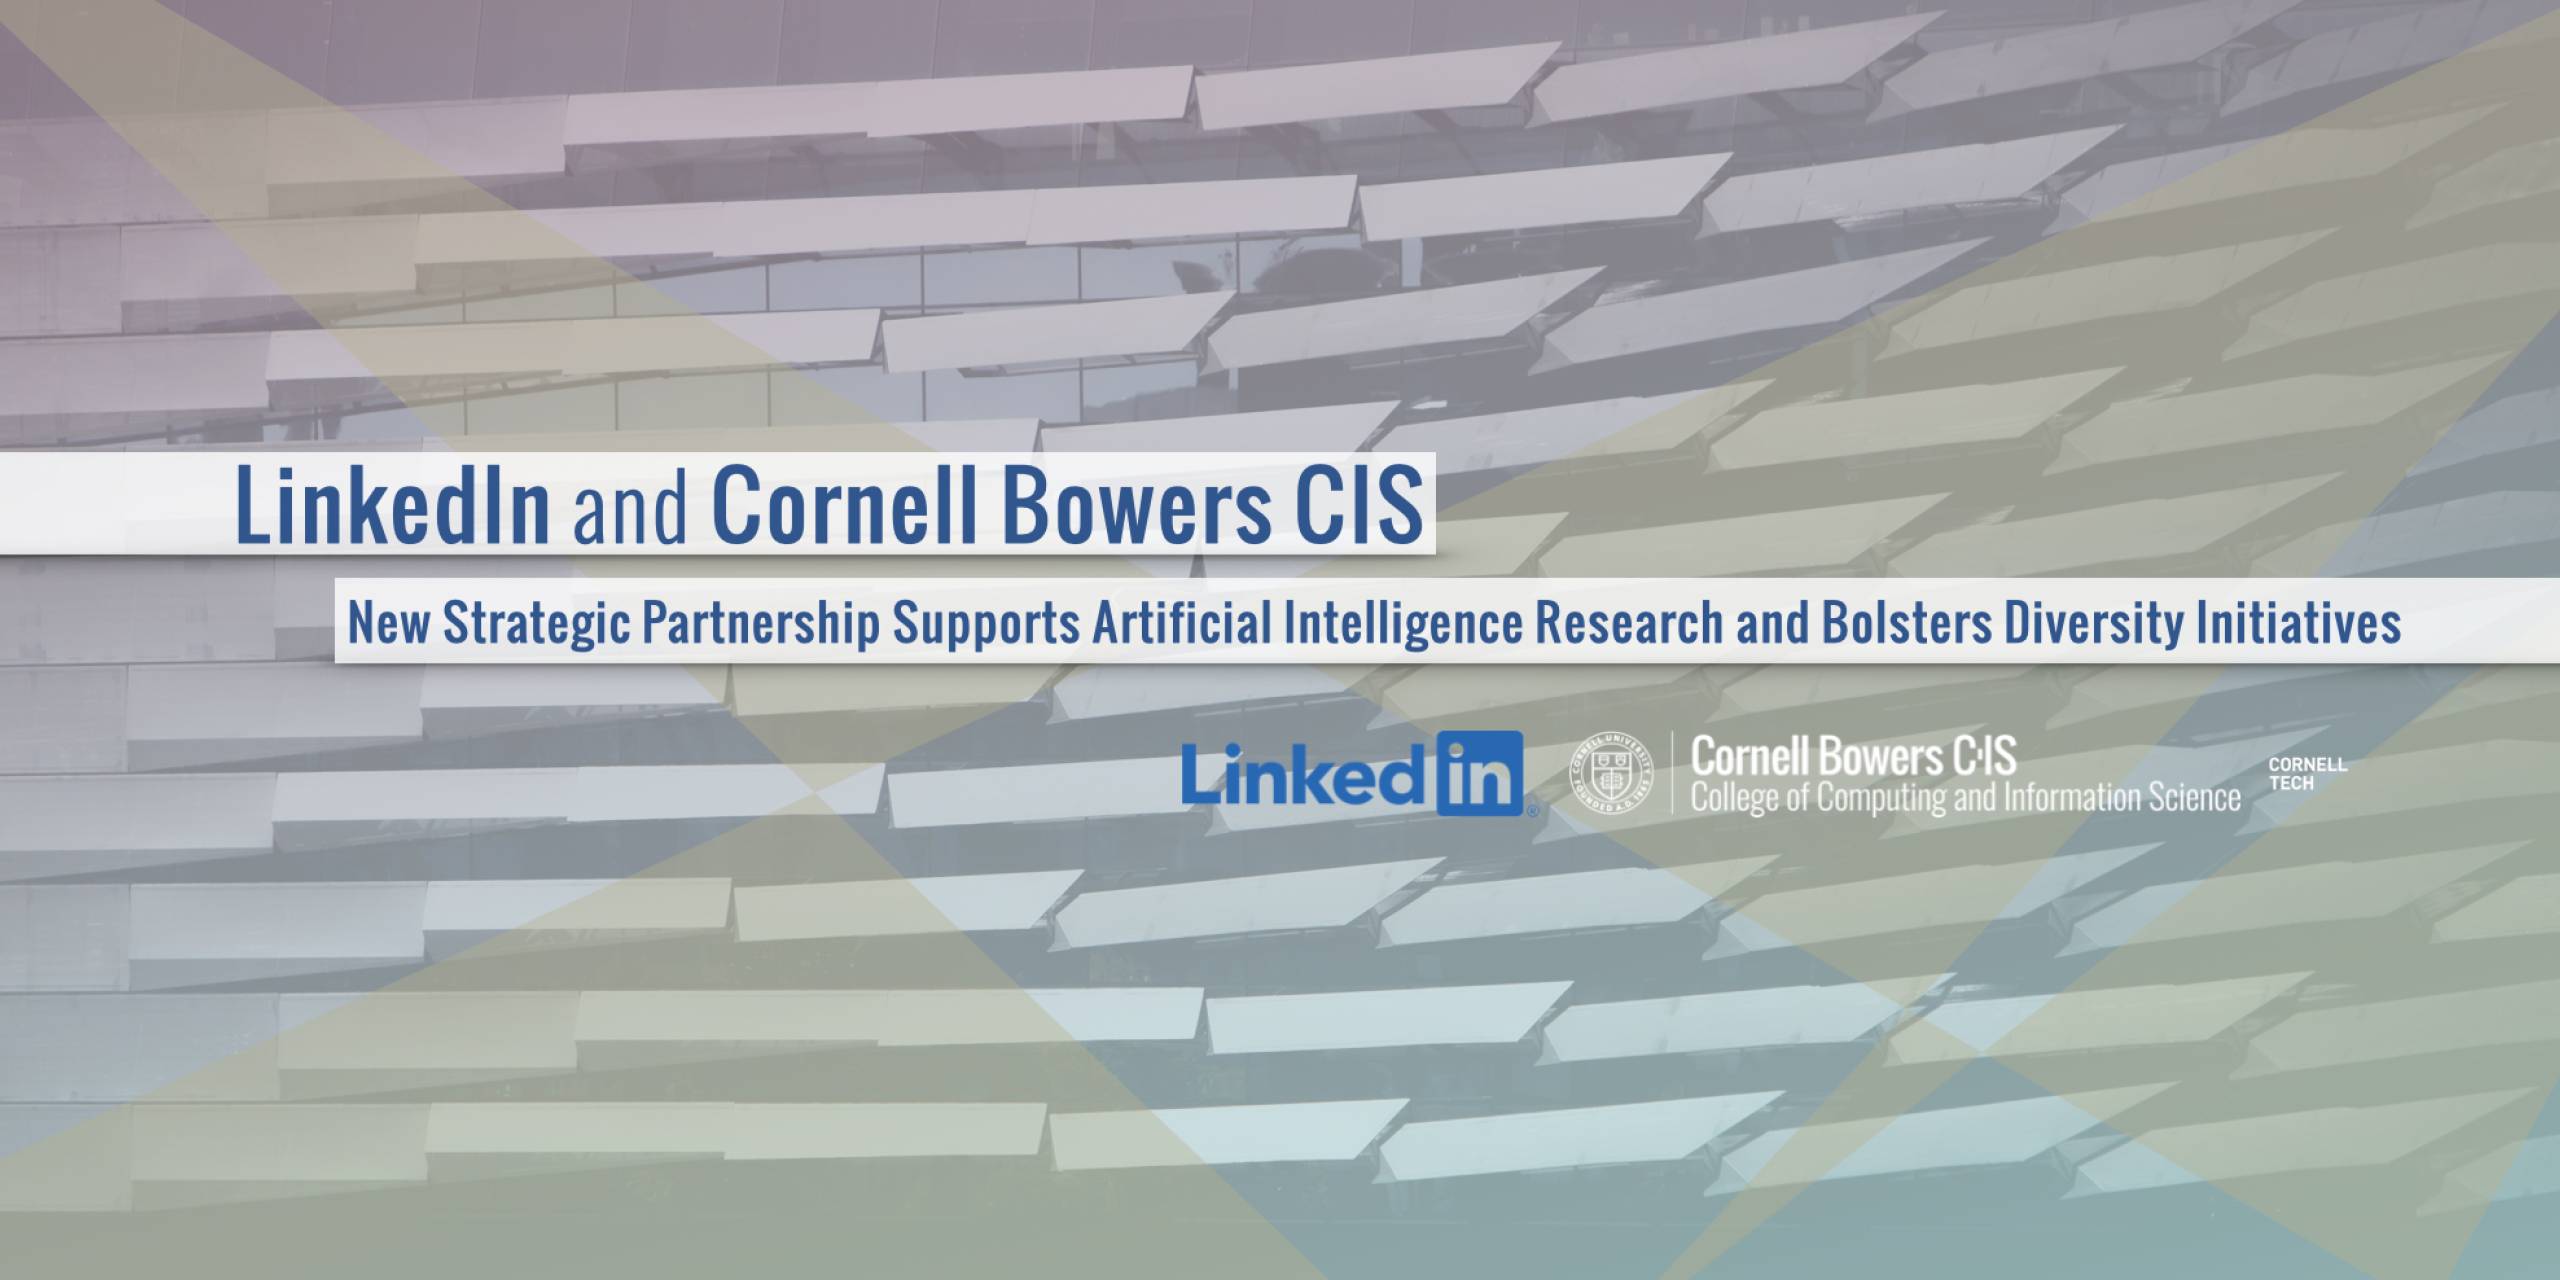 Linkedln and Cornell Bowers CIS Launch Strategic Partnership